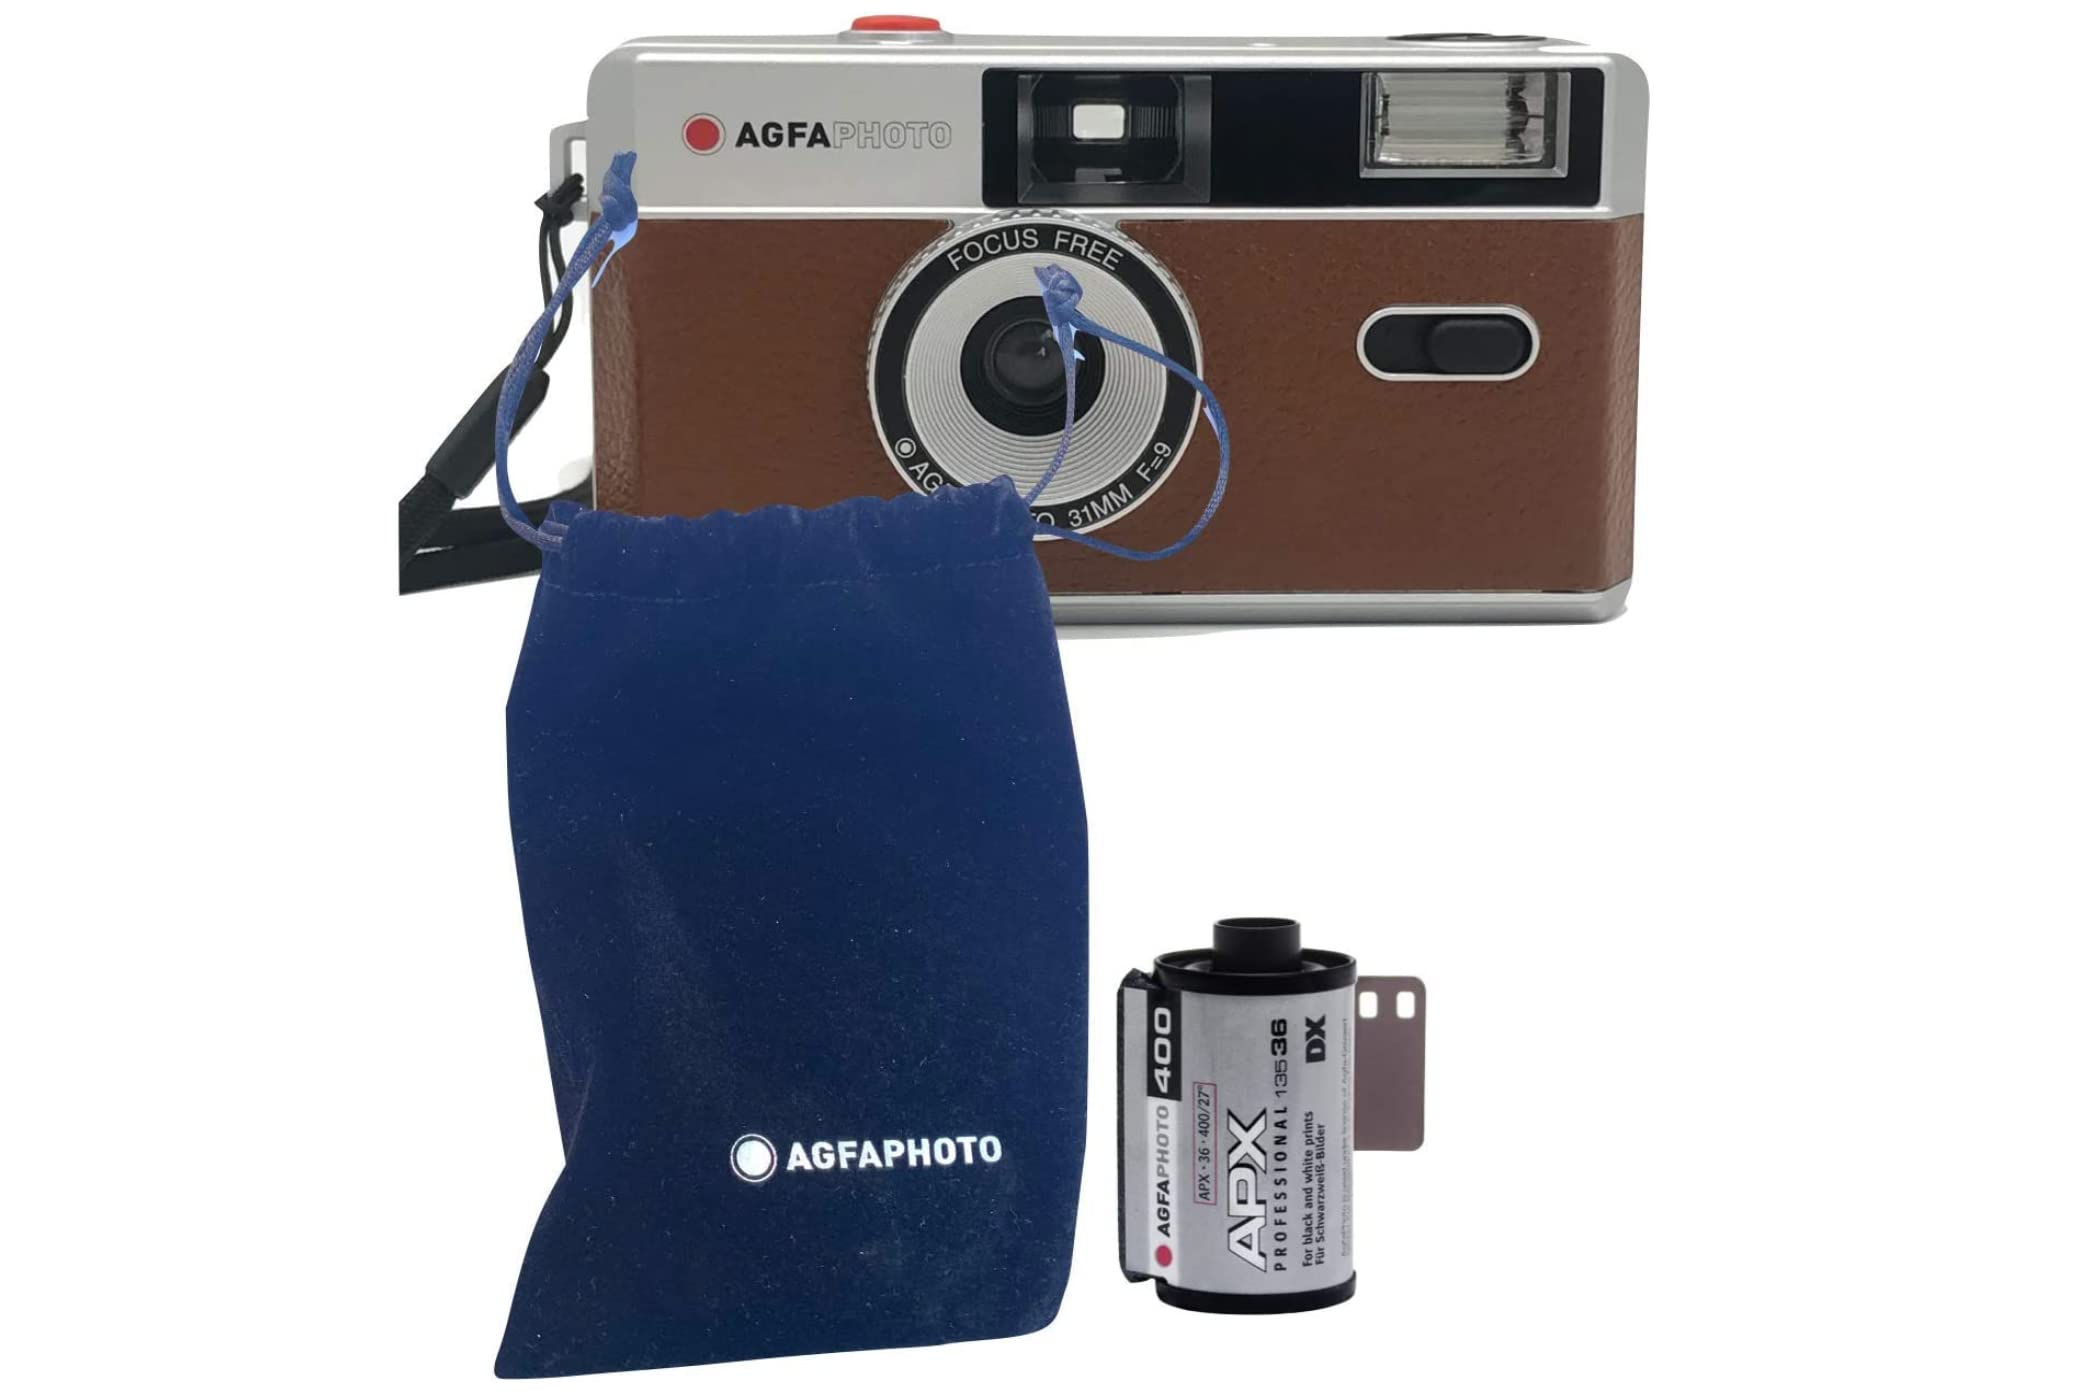 AgfaPhoto analoge 35mm Foto Kamera Black Set (B+W Film + Batterie)